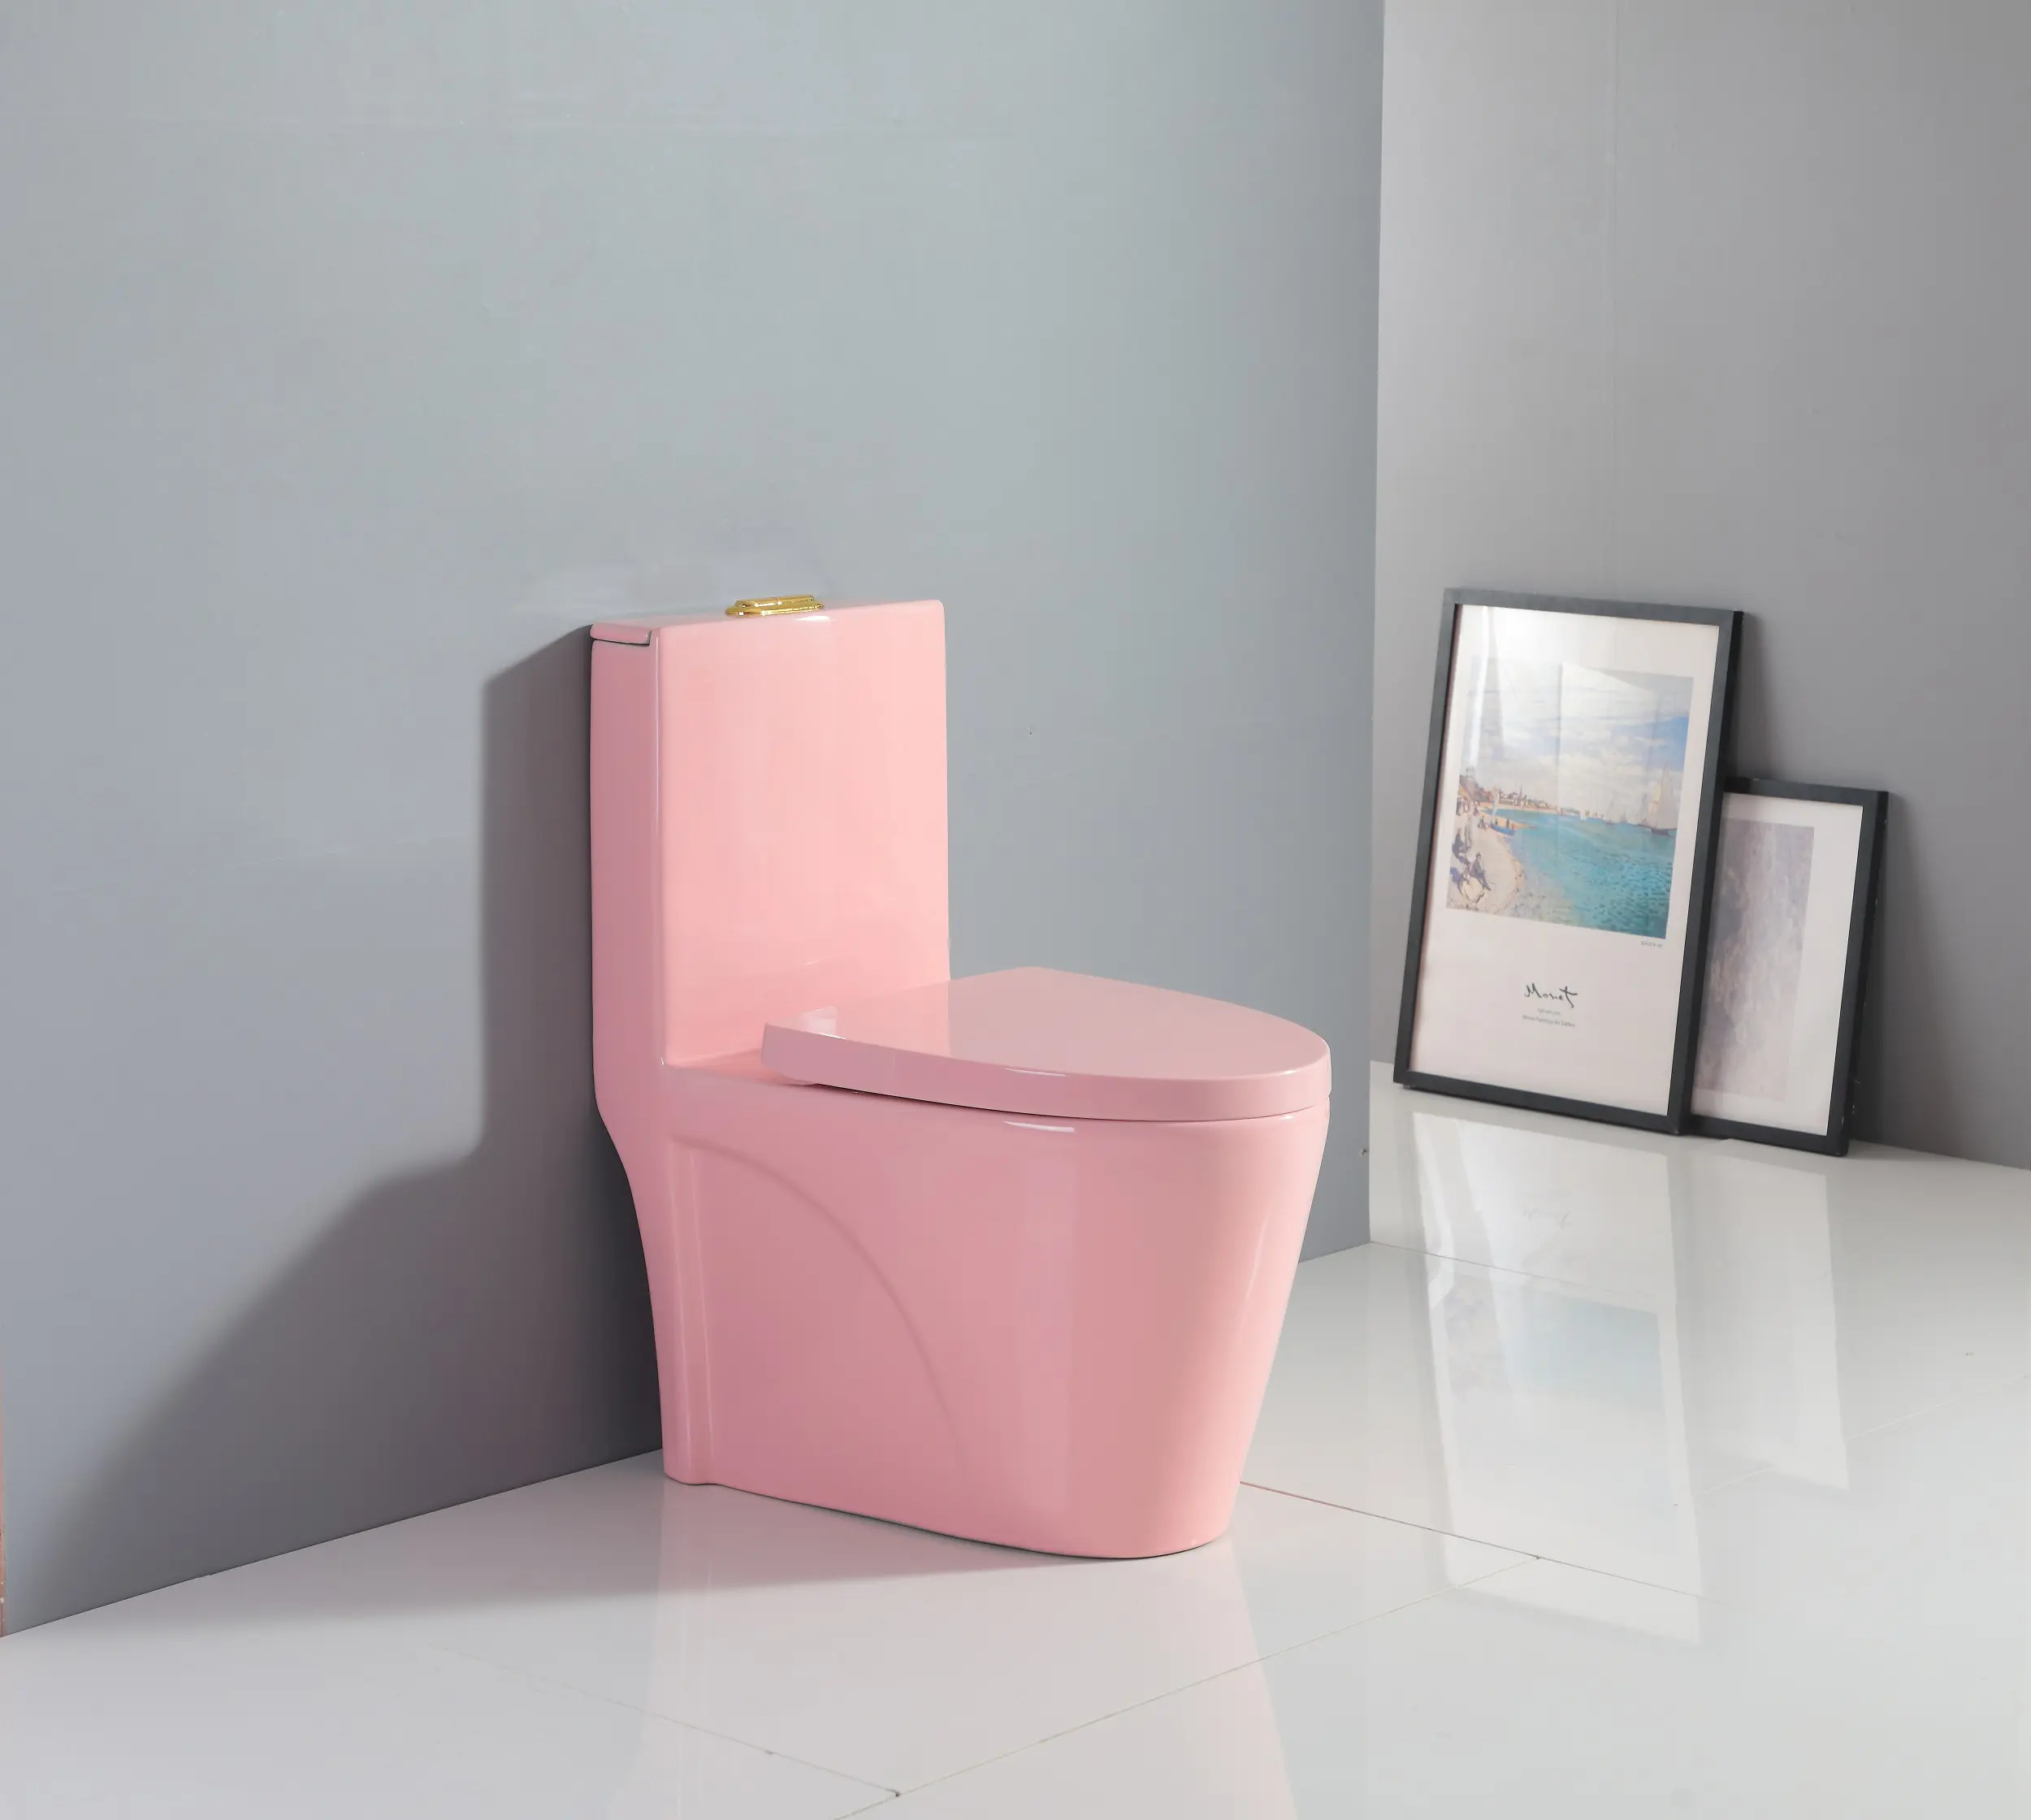 2022 New design ceramic toilet pink color toilet brown bathroom vanity double trap siphonic toilet